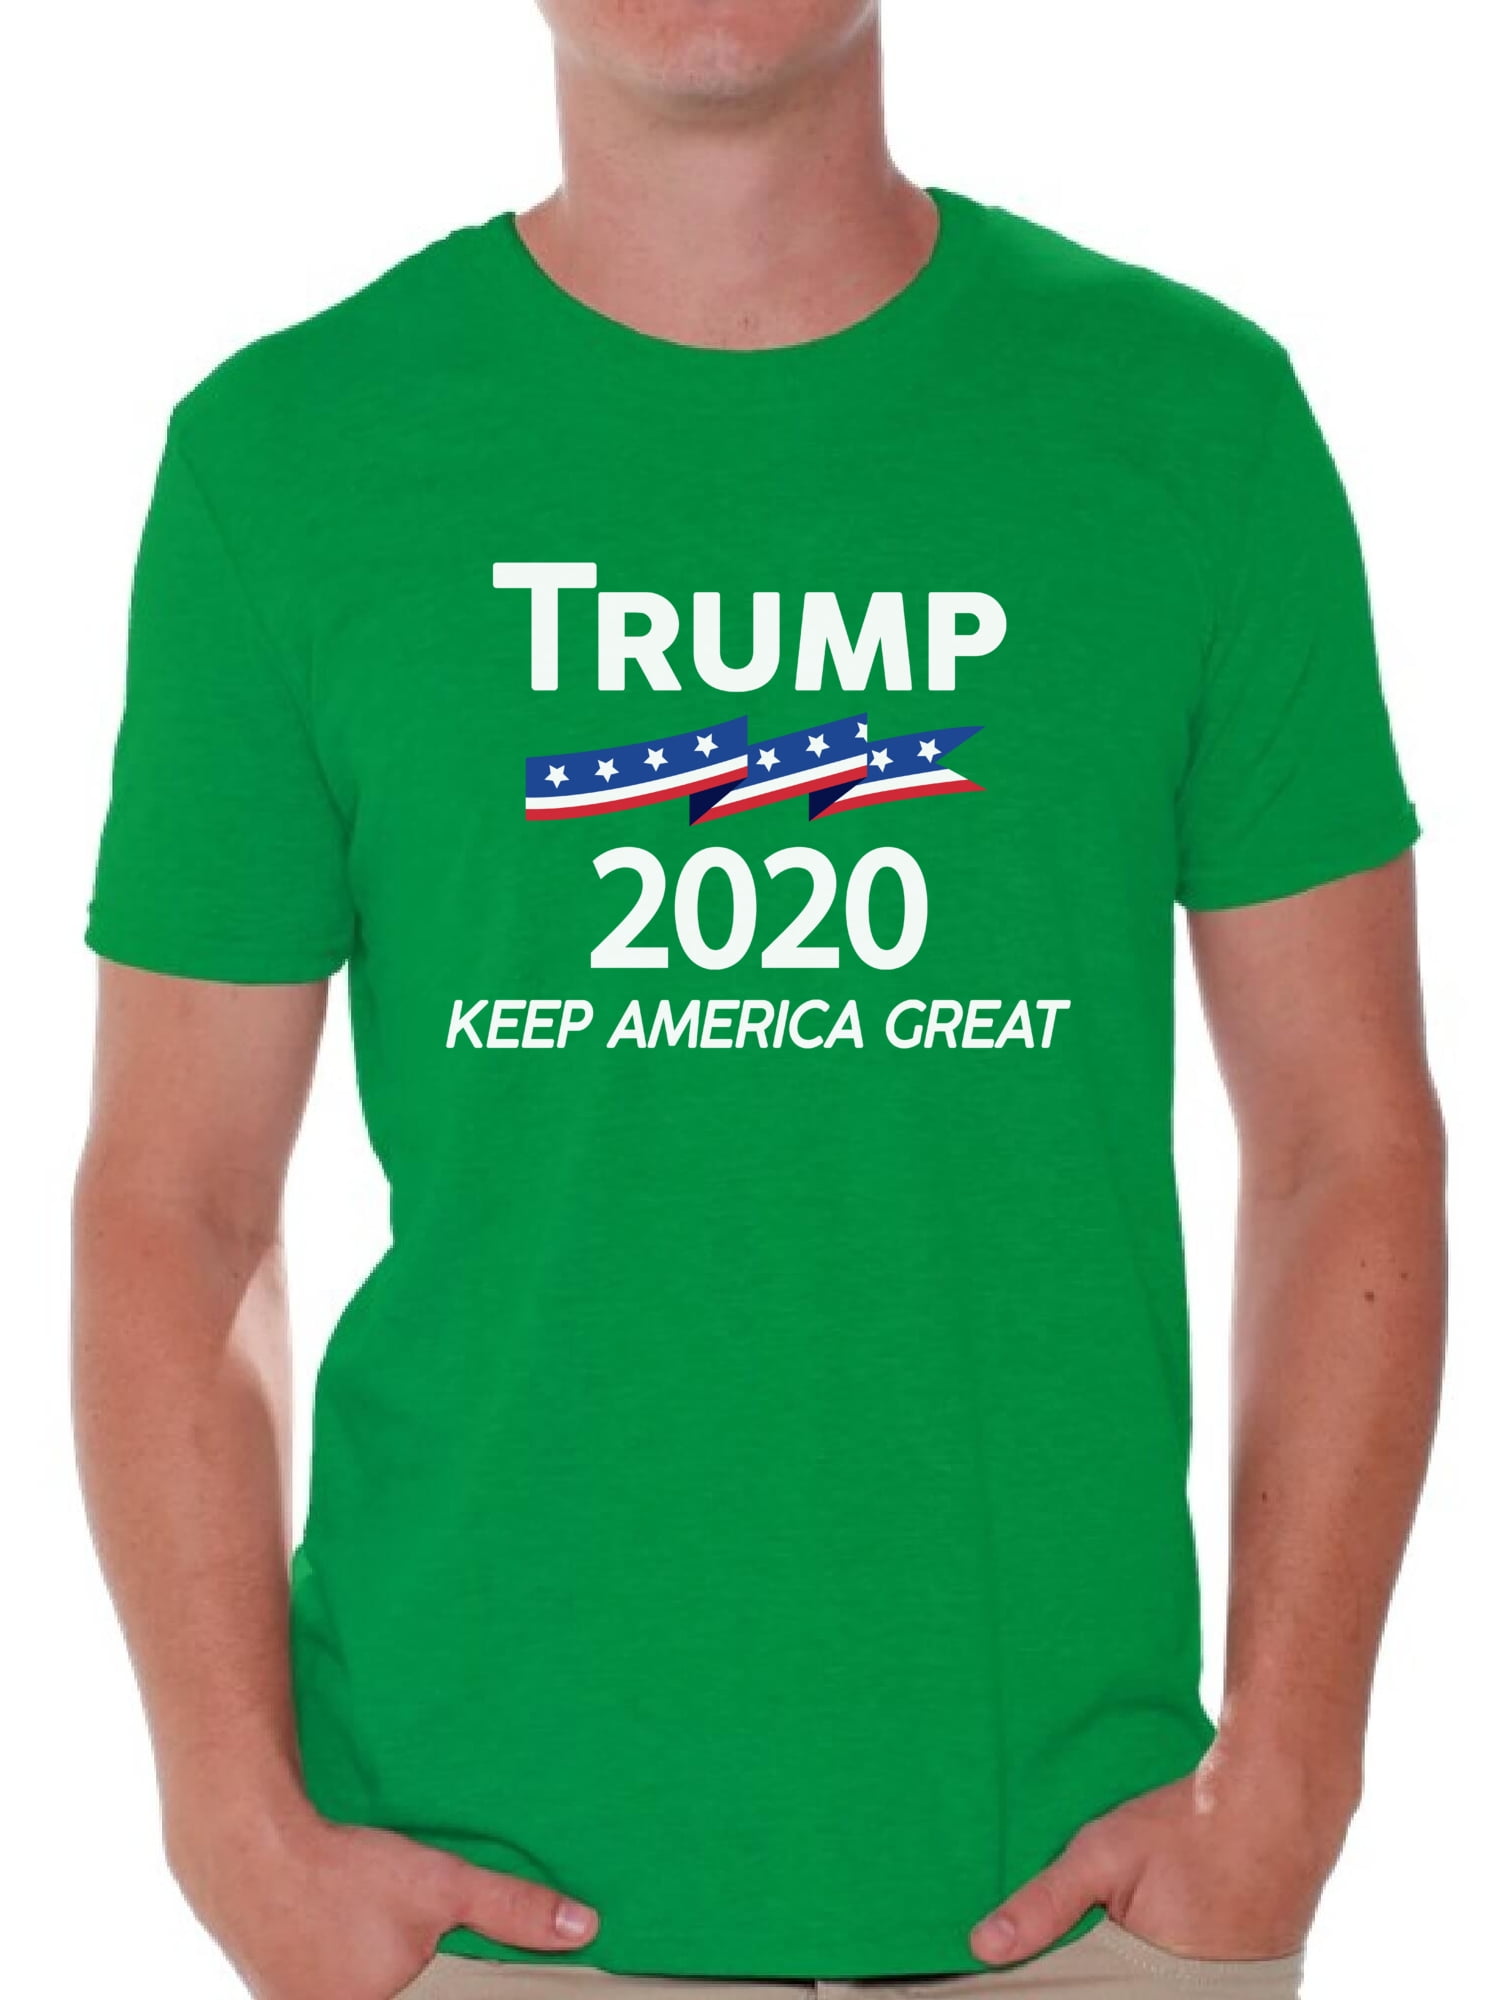 Trump 45 Popular Political Shirts USA Flag Drain The Swamp Youth Boy's Donald Trump